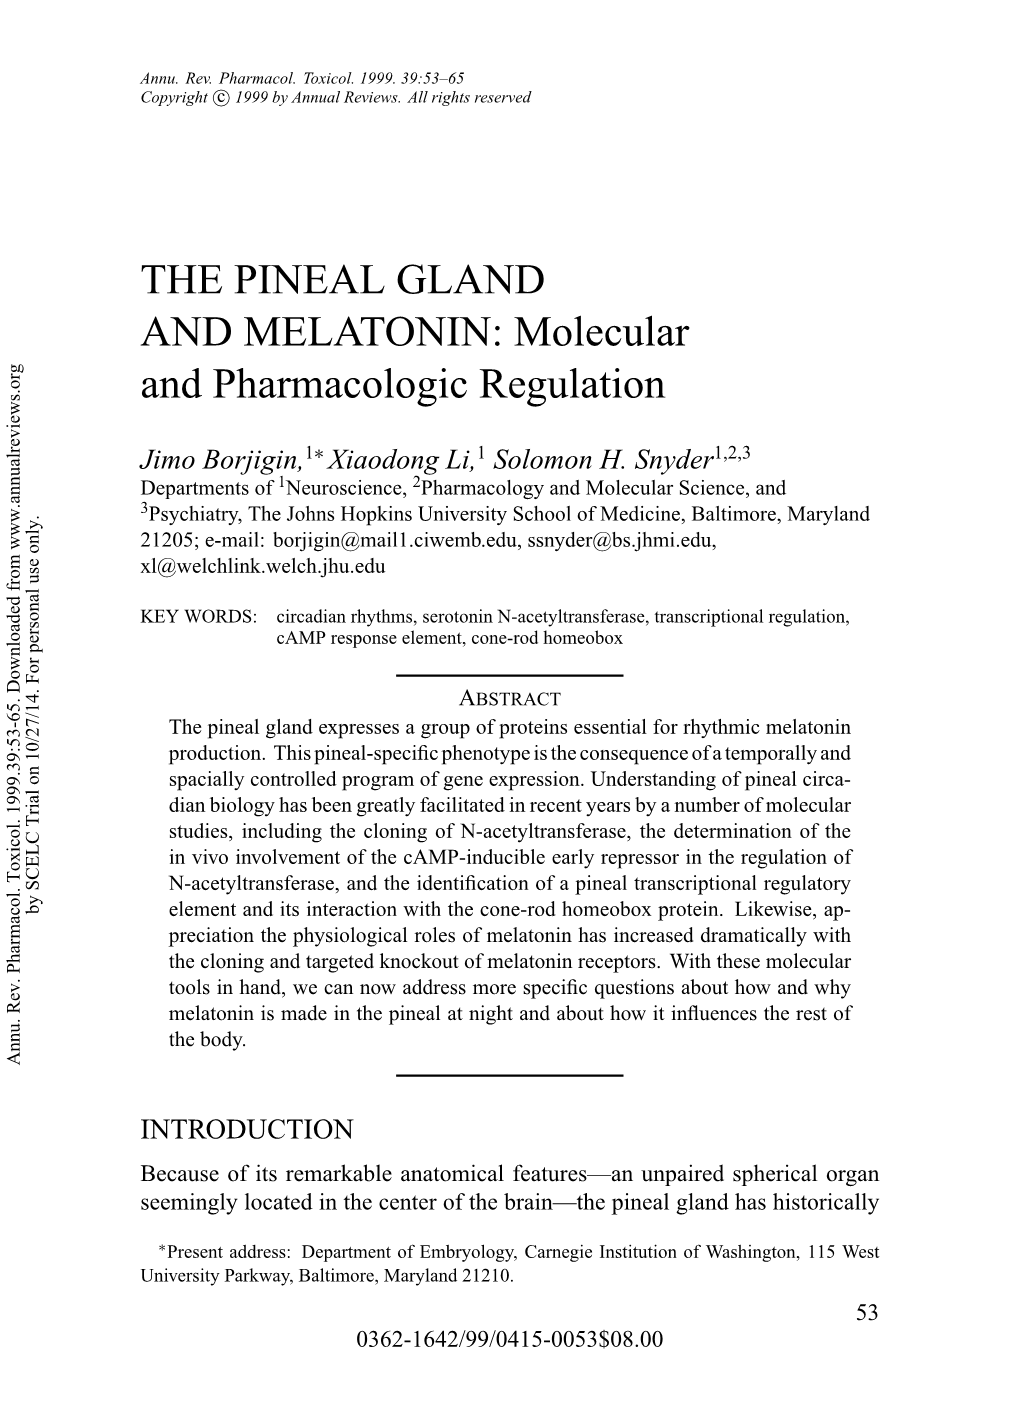 THE PINEAL GLAND and MELATONIN: Molecular and Pharmacologic Regulation